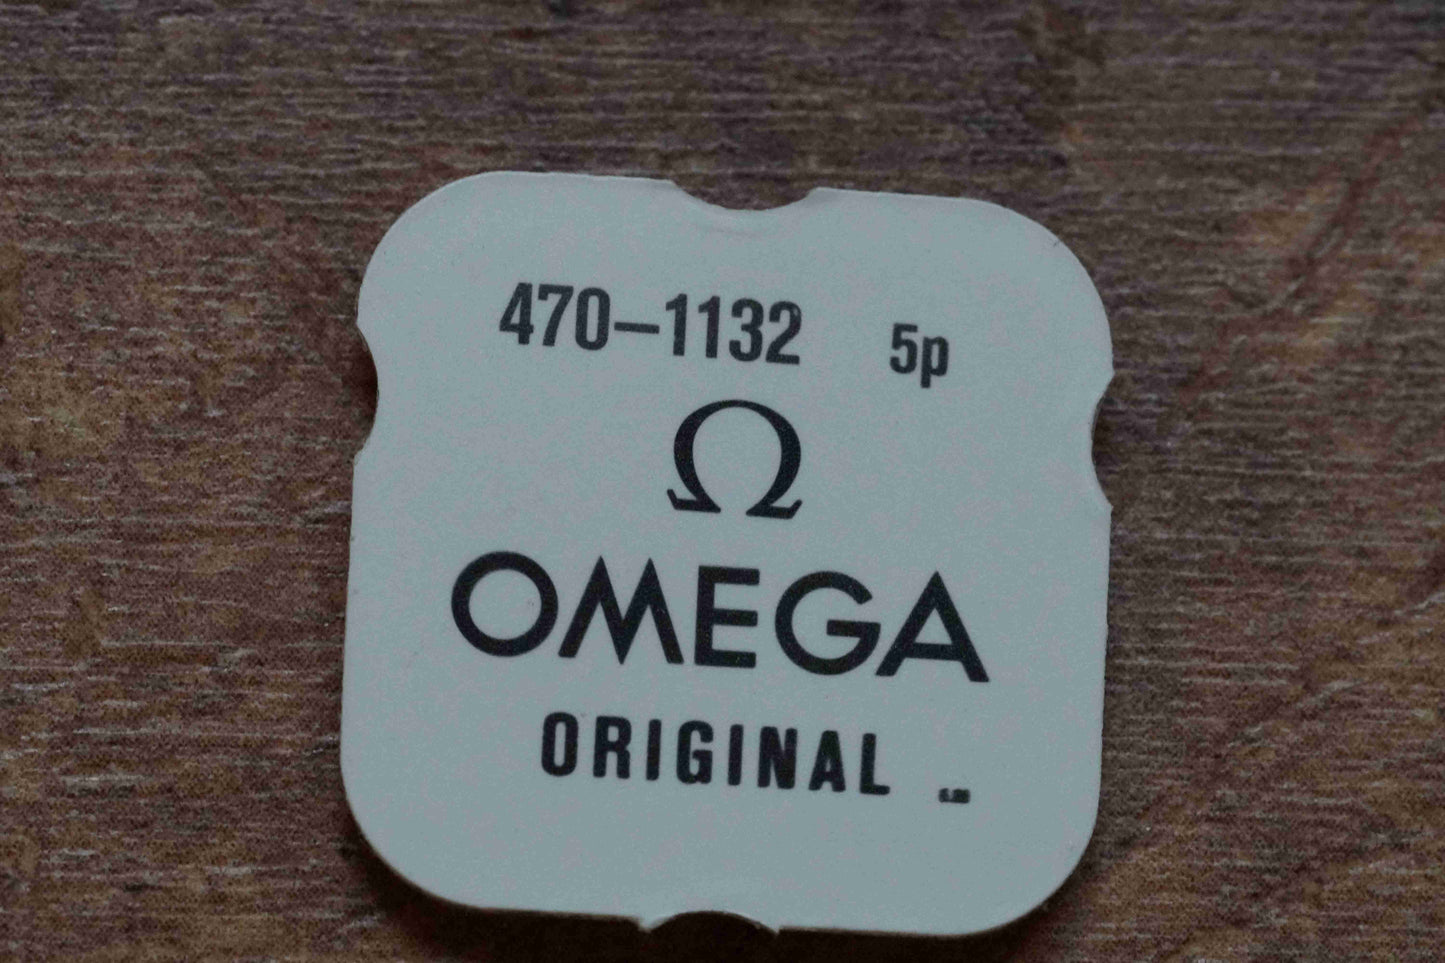 Omega cal 470 part 1132 Pressure spring for setting lever